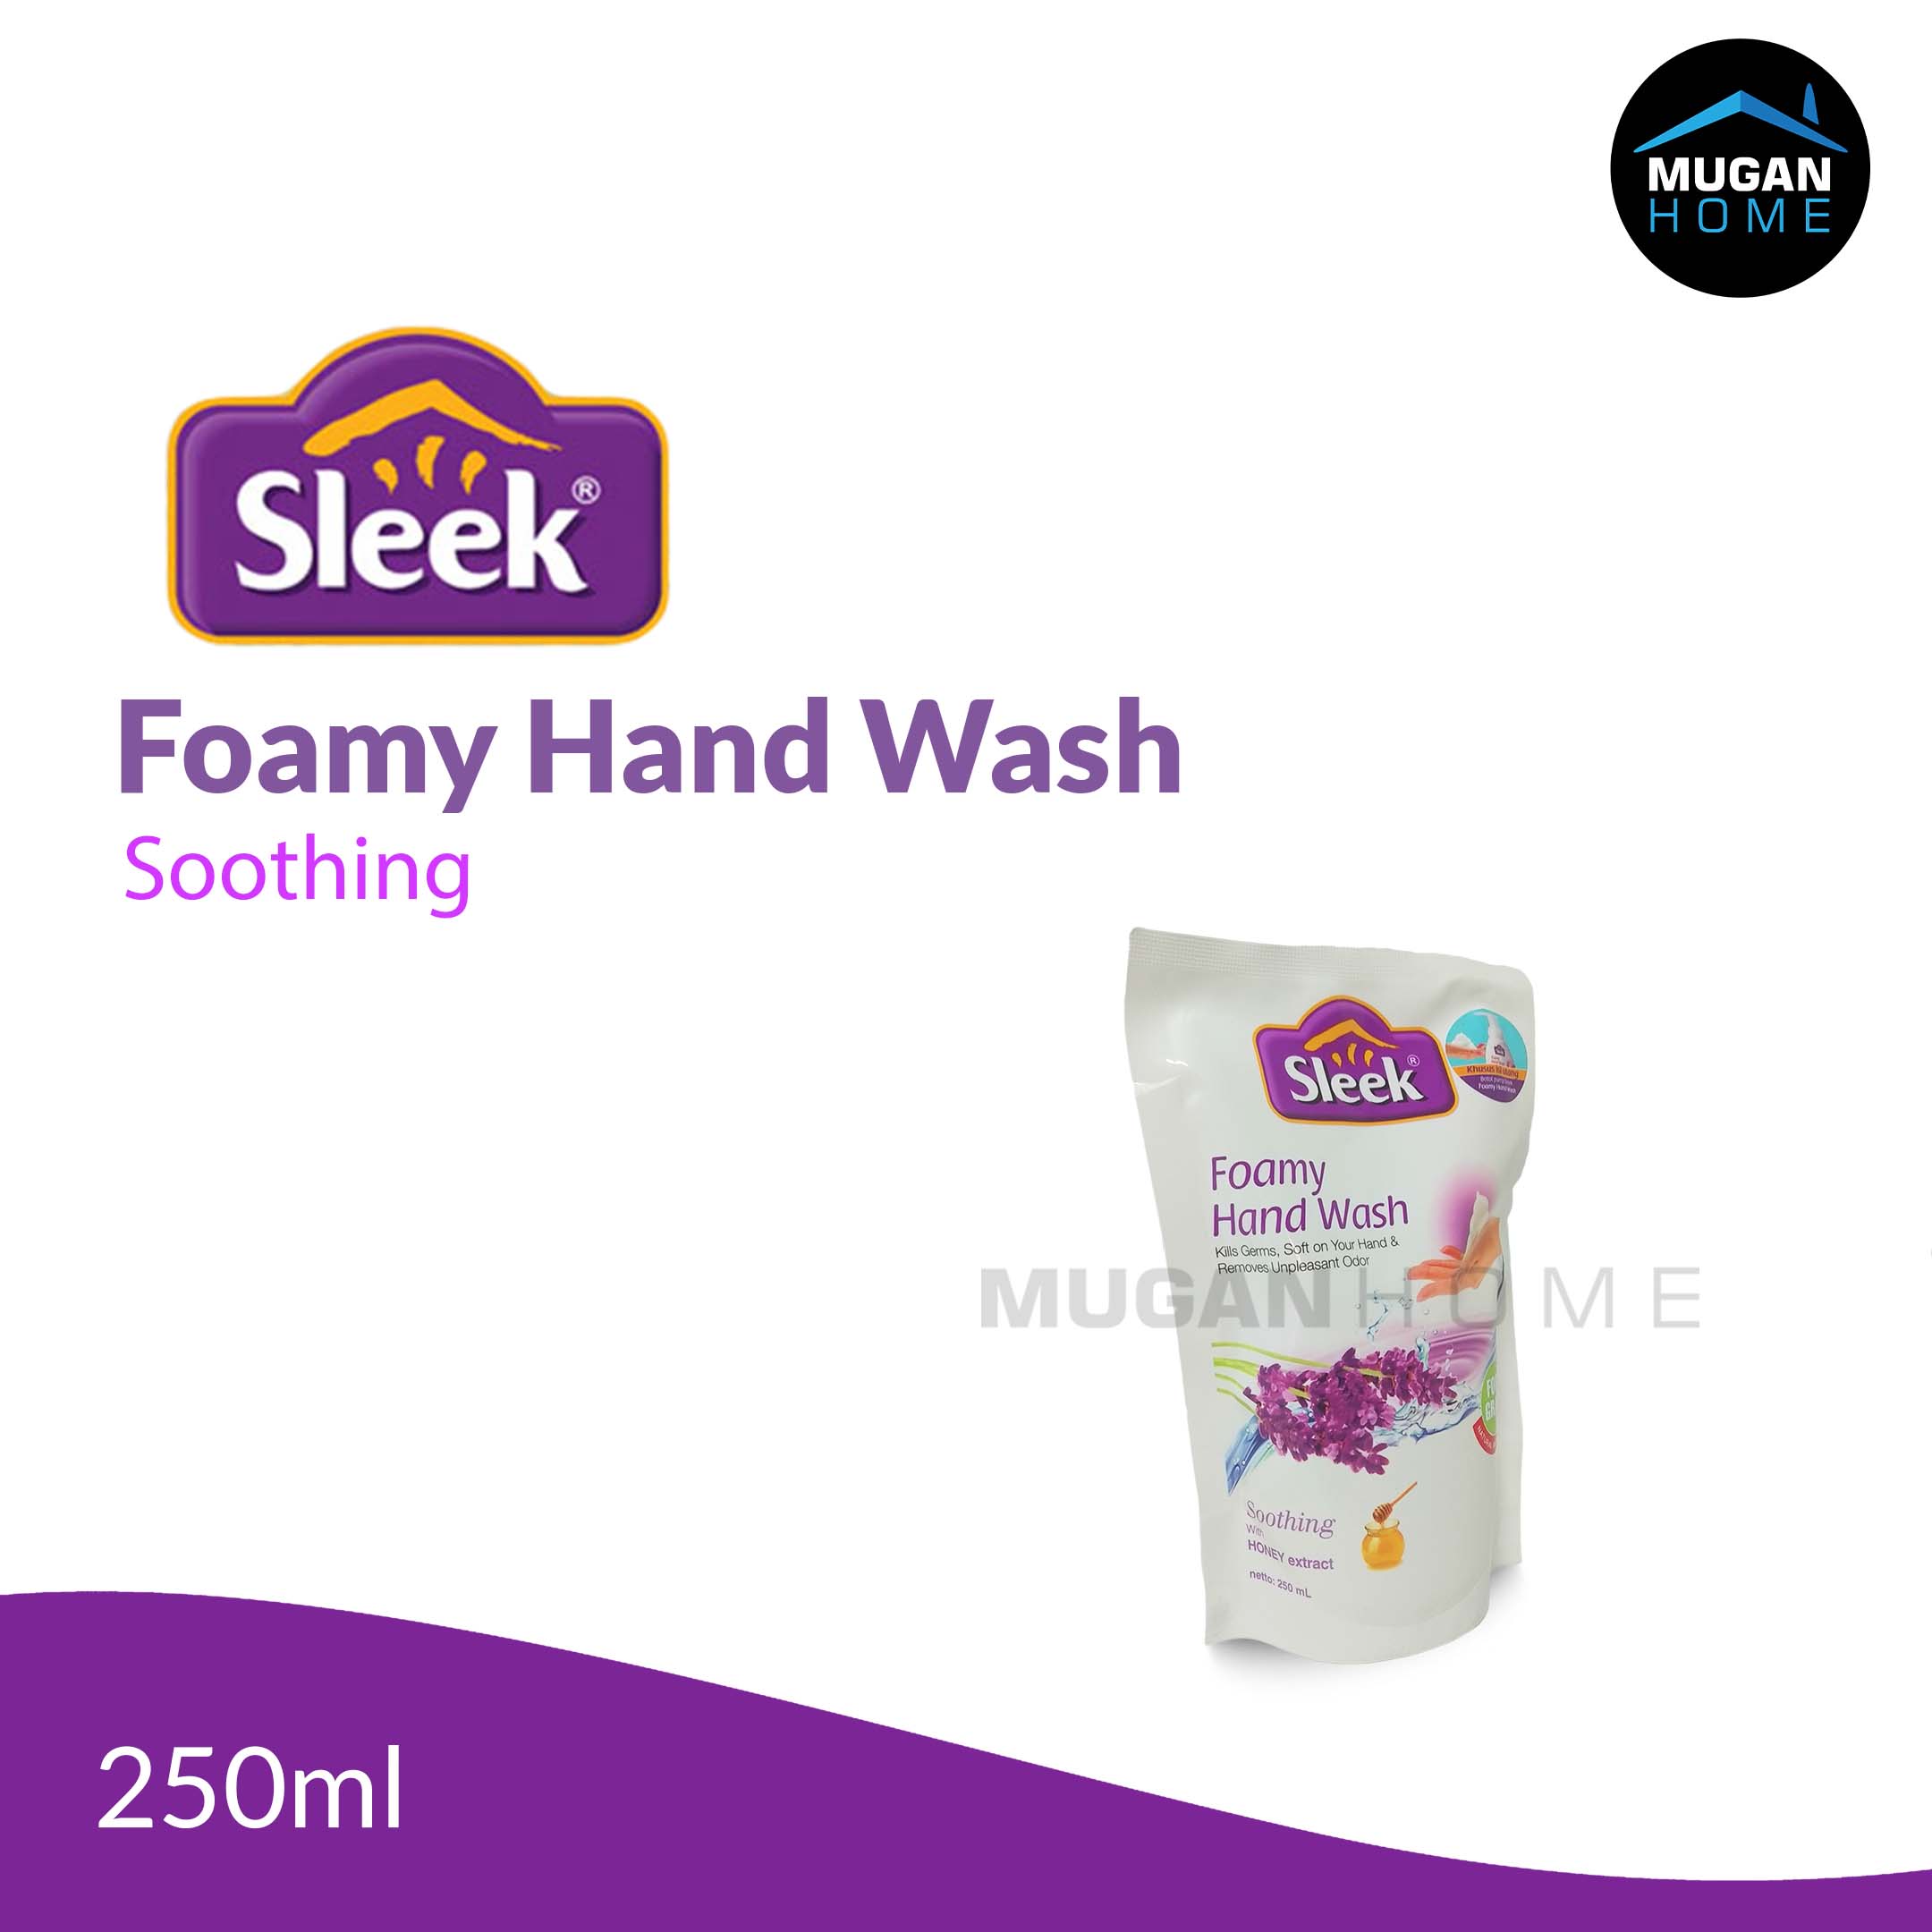 SLEEK FOAMY HAND WASH 250ML SOOTHING POUCH